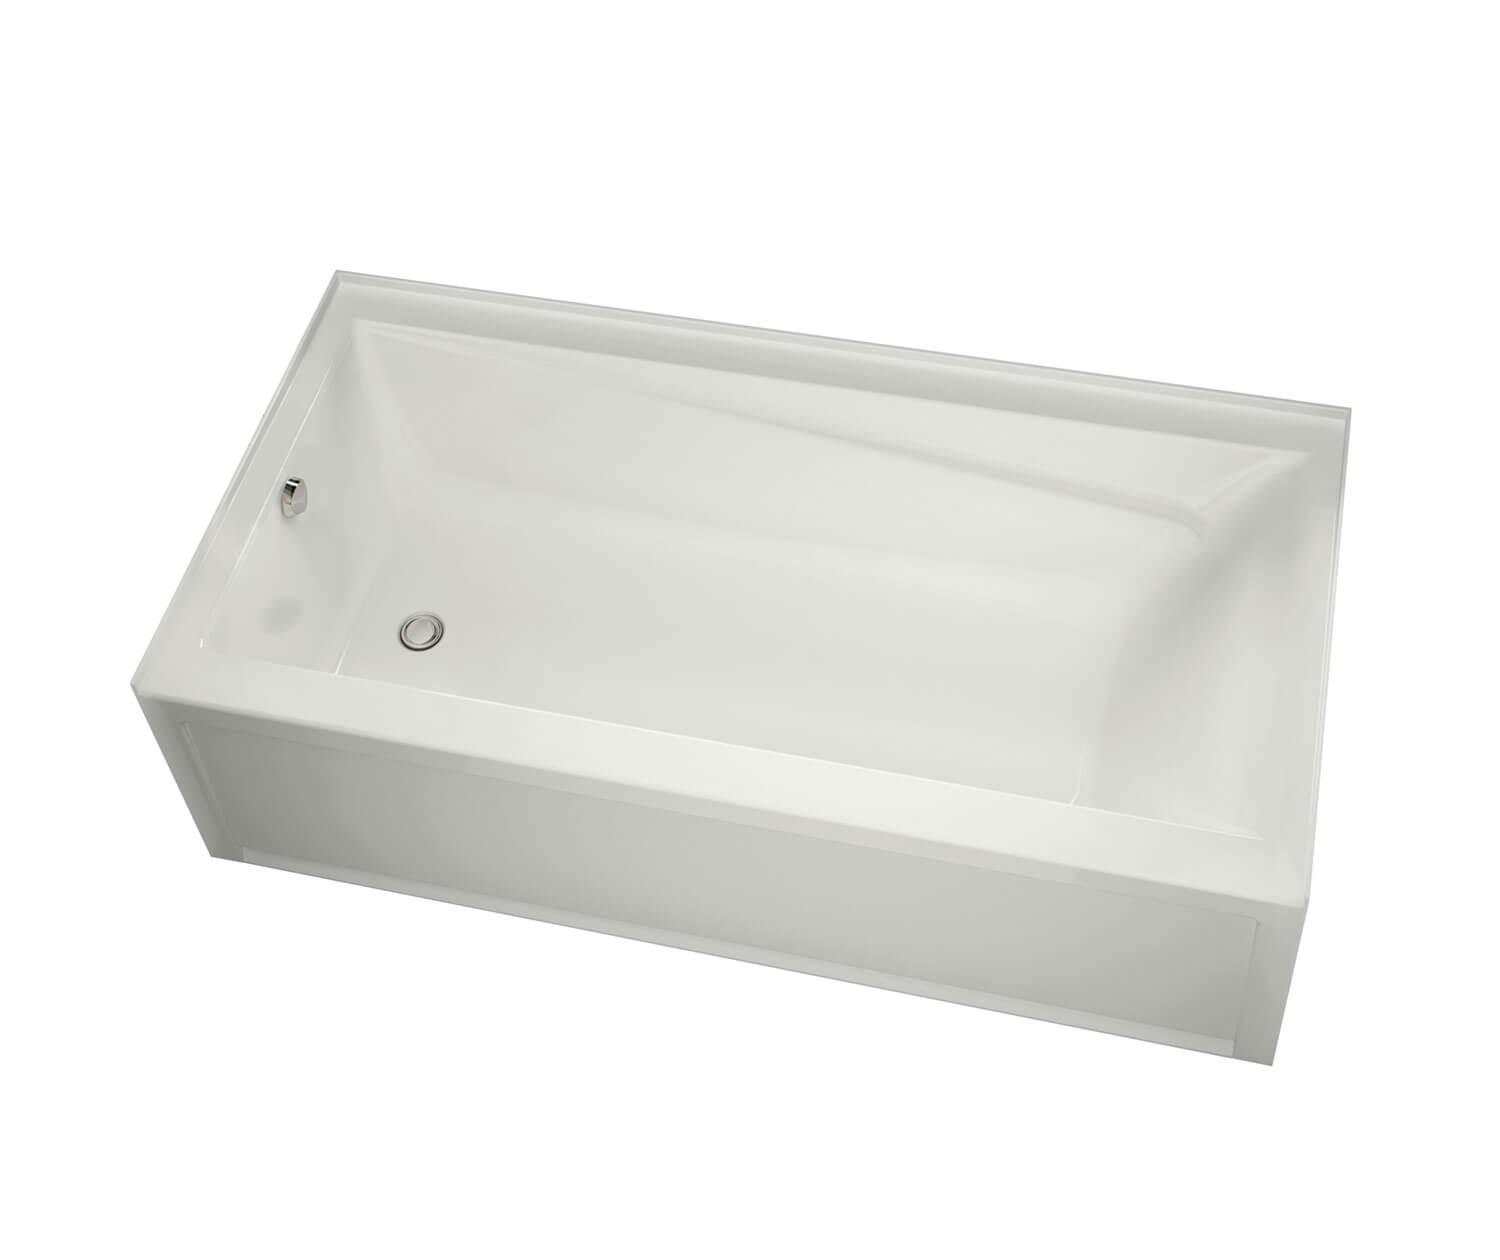 Maax Exhibit IFS AFR Acrylic Alcove Right-Hand Drain Bathtub in White 60 x 32 105512 - Hbdepot